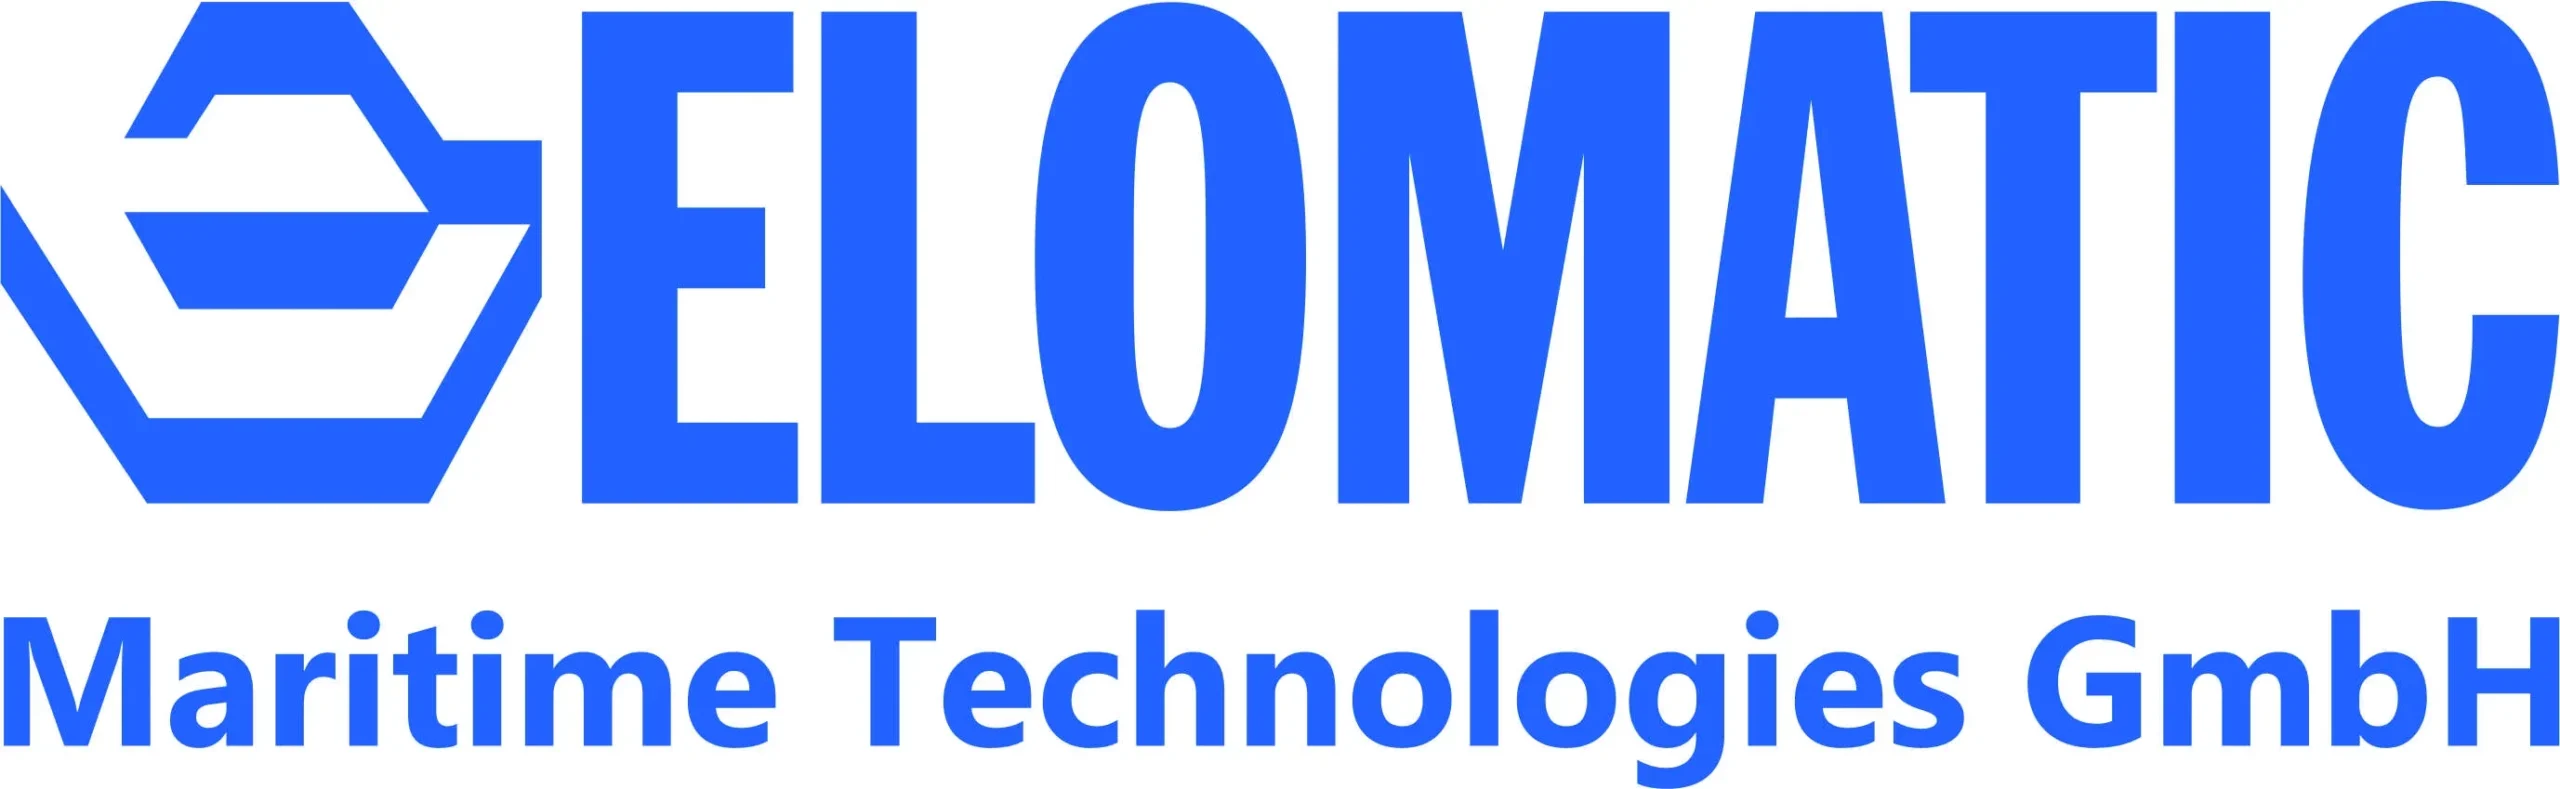 Elomatic Maritime Technologies GmbH Logo